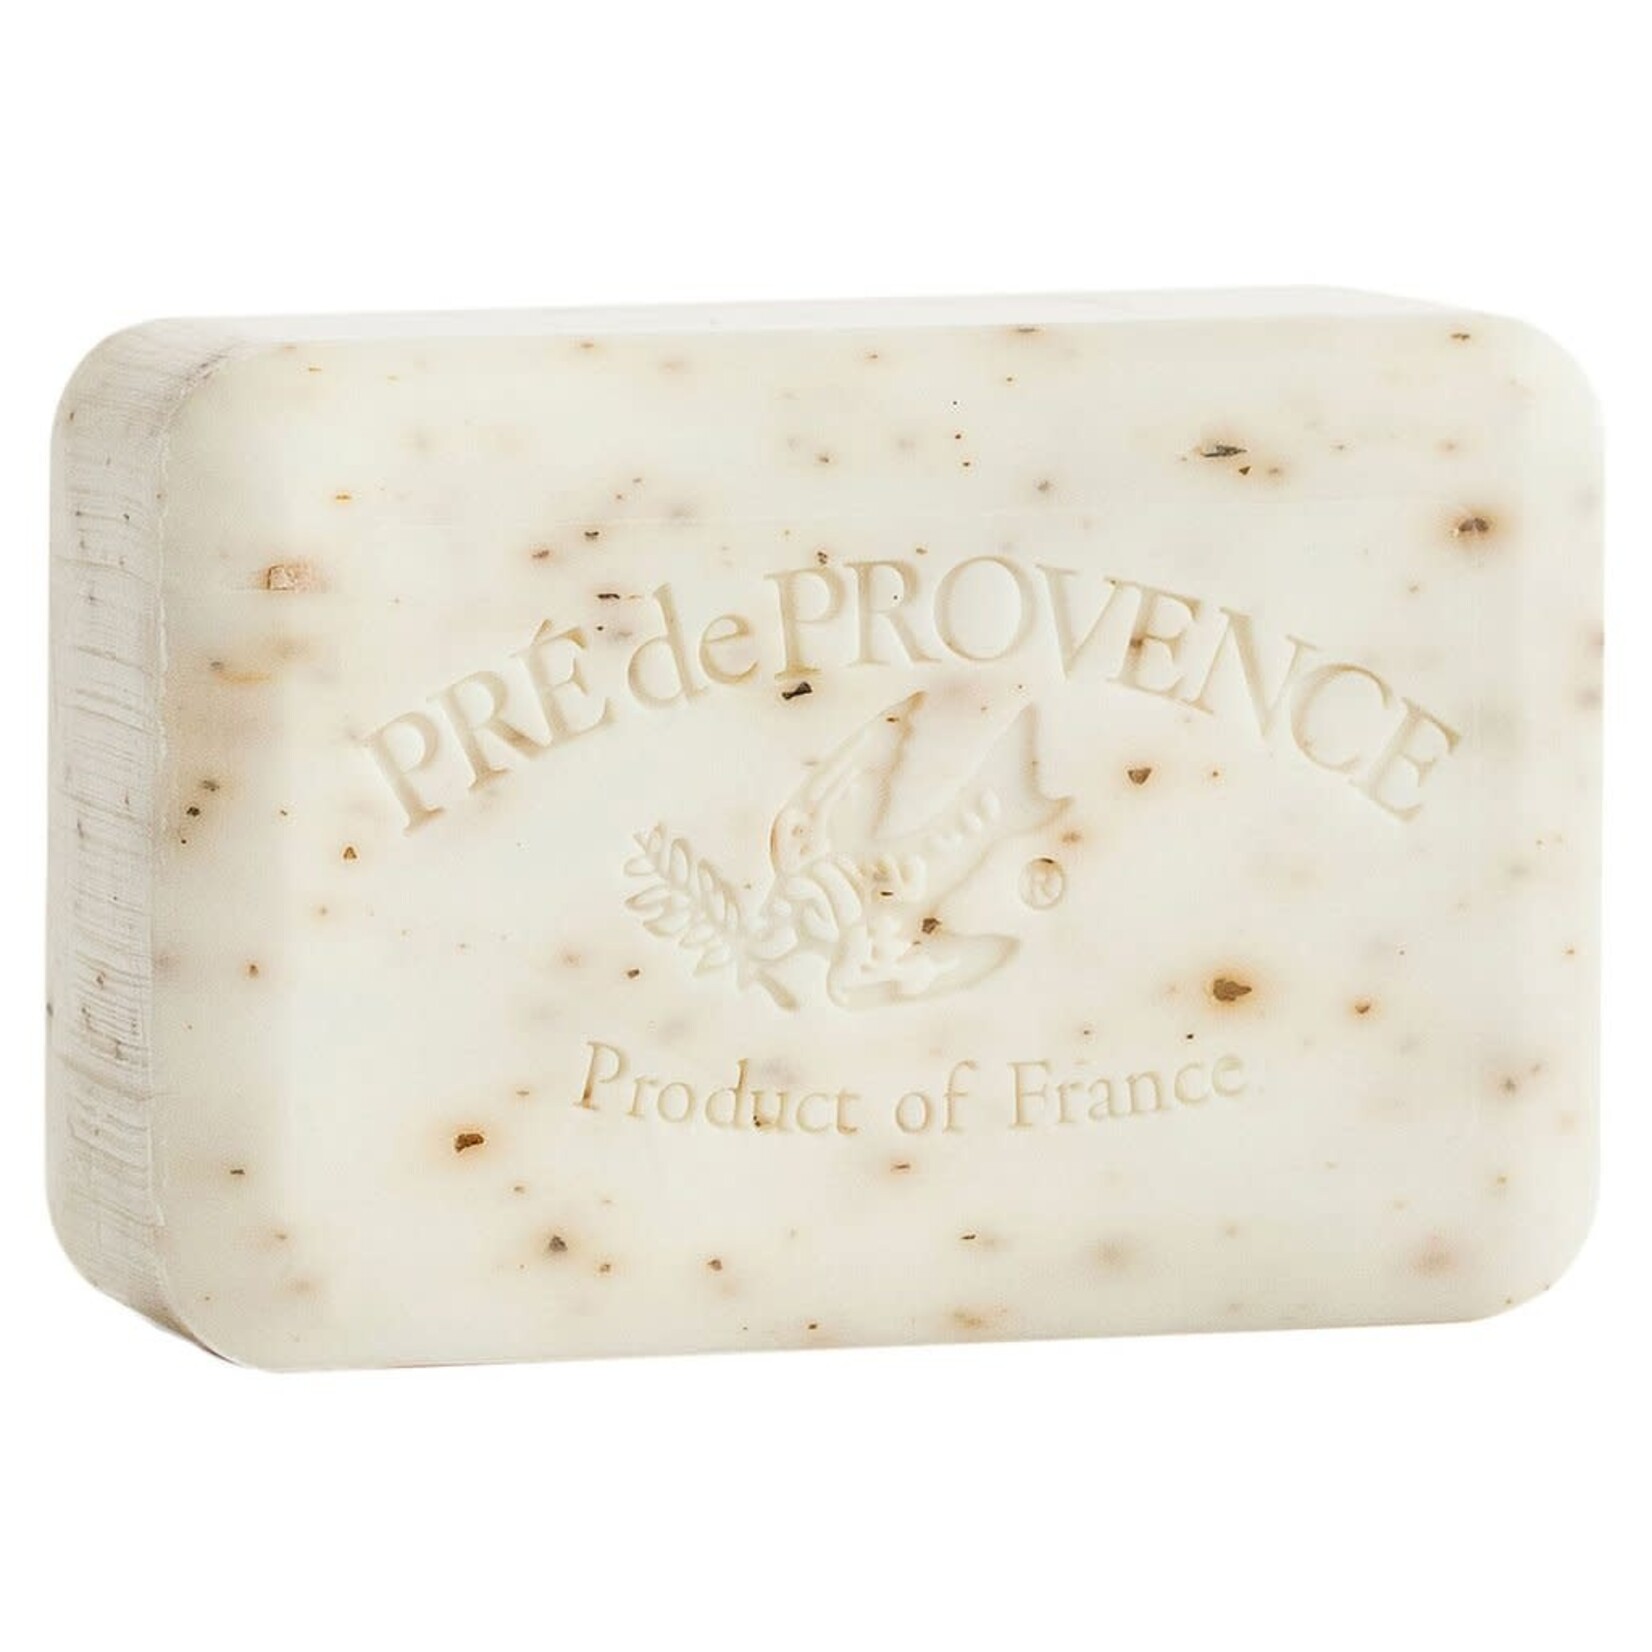 Pre de Provence 150g Soap